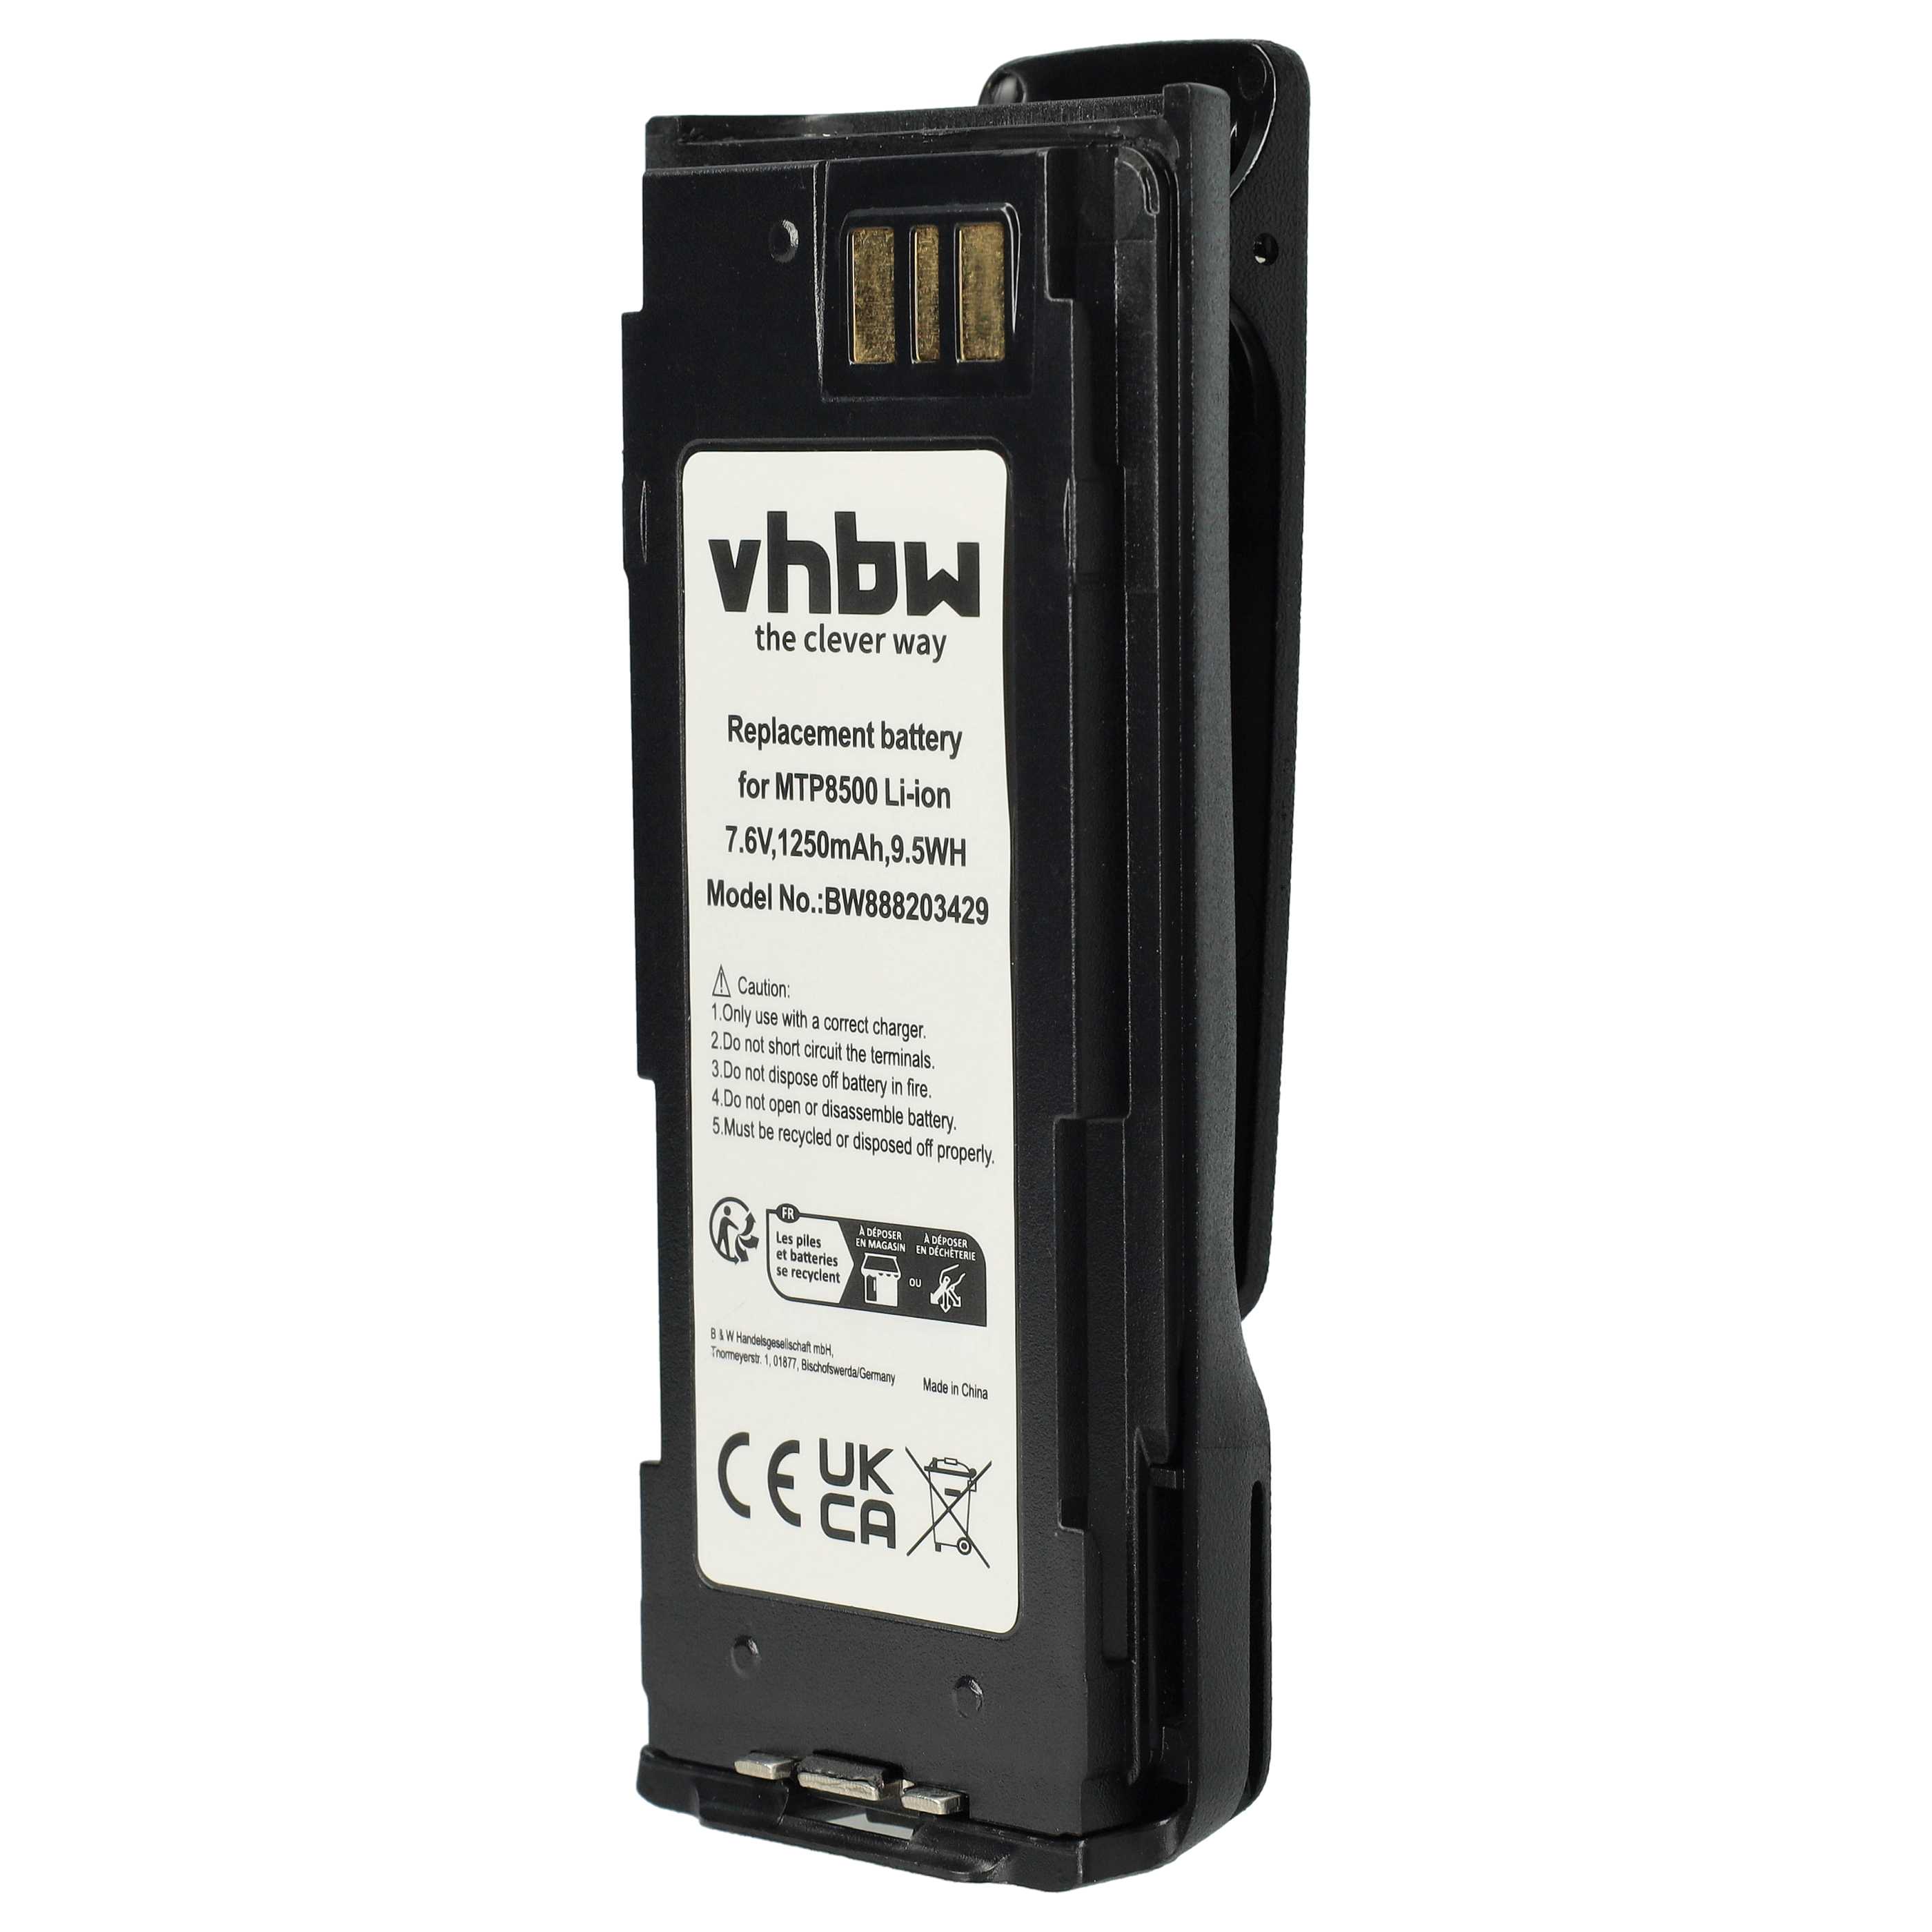 Radio Battery Replacement for Motorola NNTN8570B, NNTN8570A, NNTN8570 - 1250mAh 7.6V Li-Ion + Belt Clip